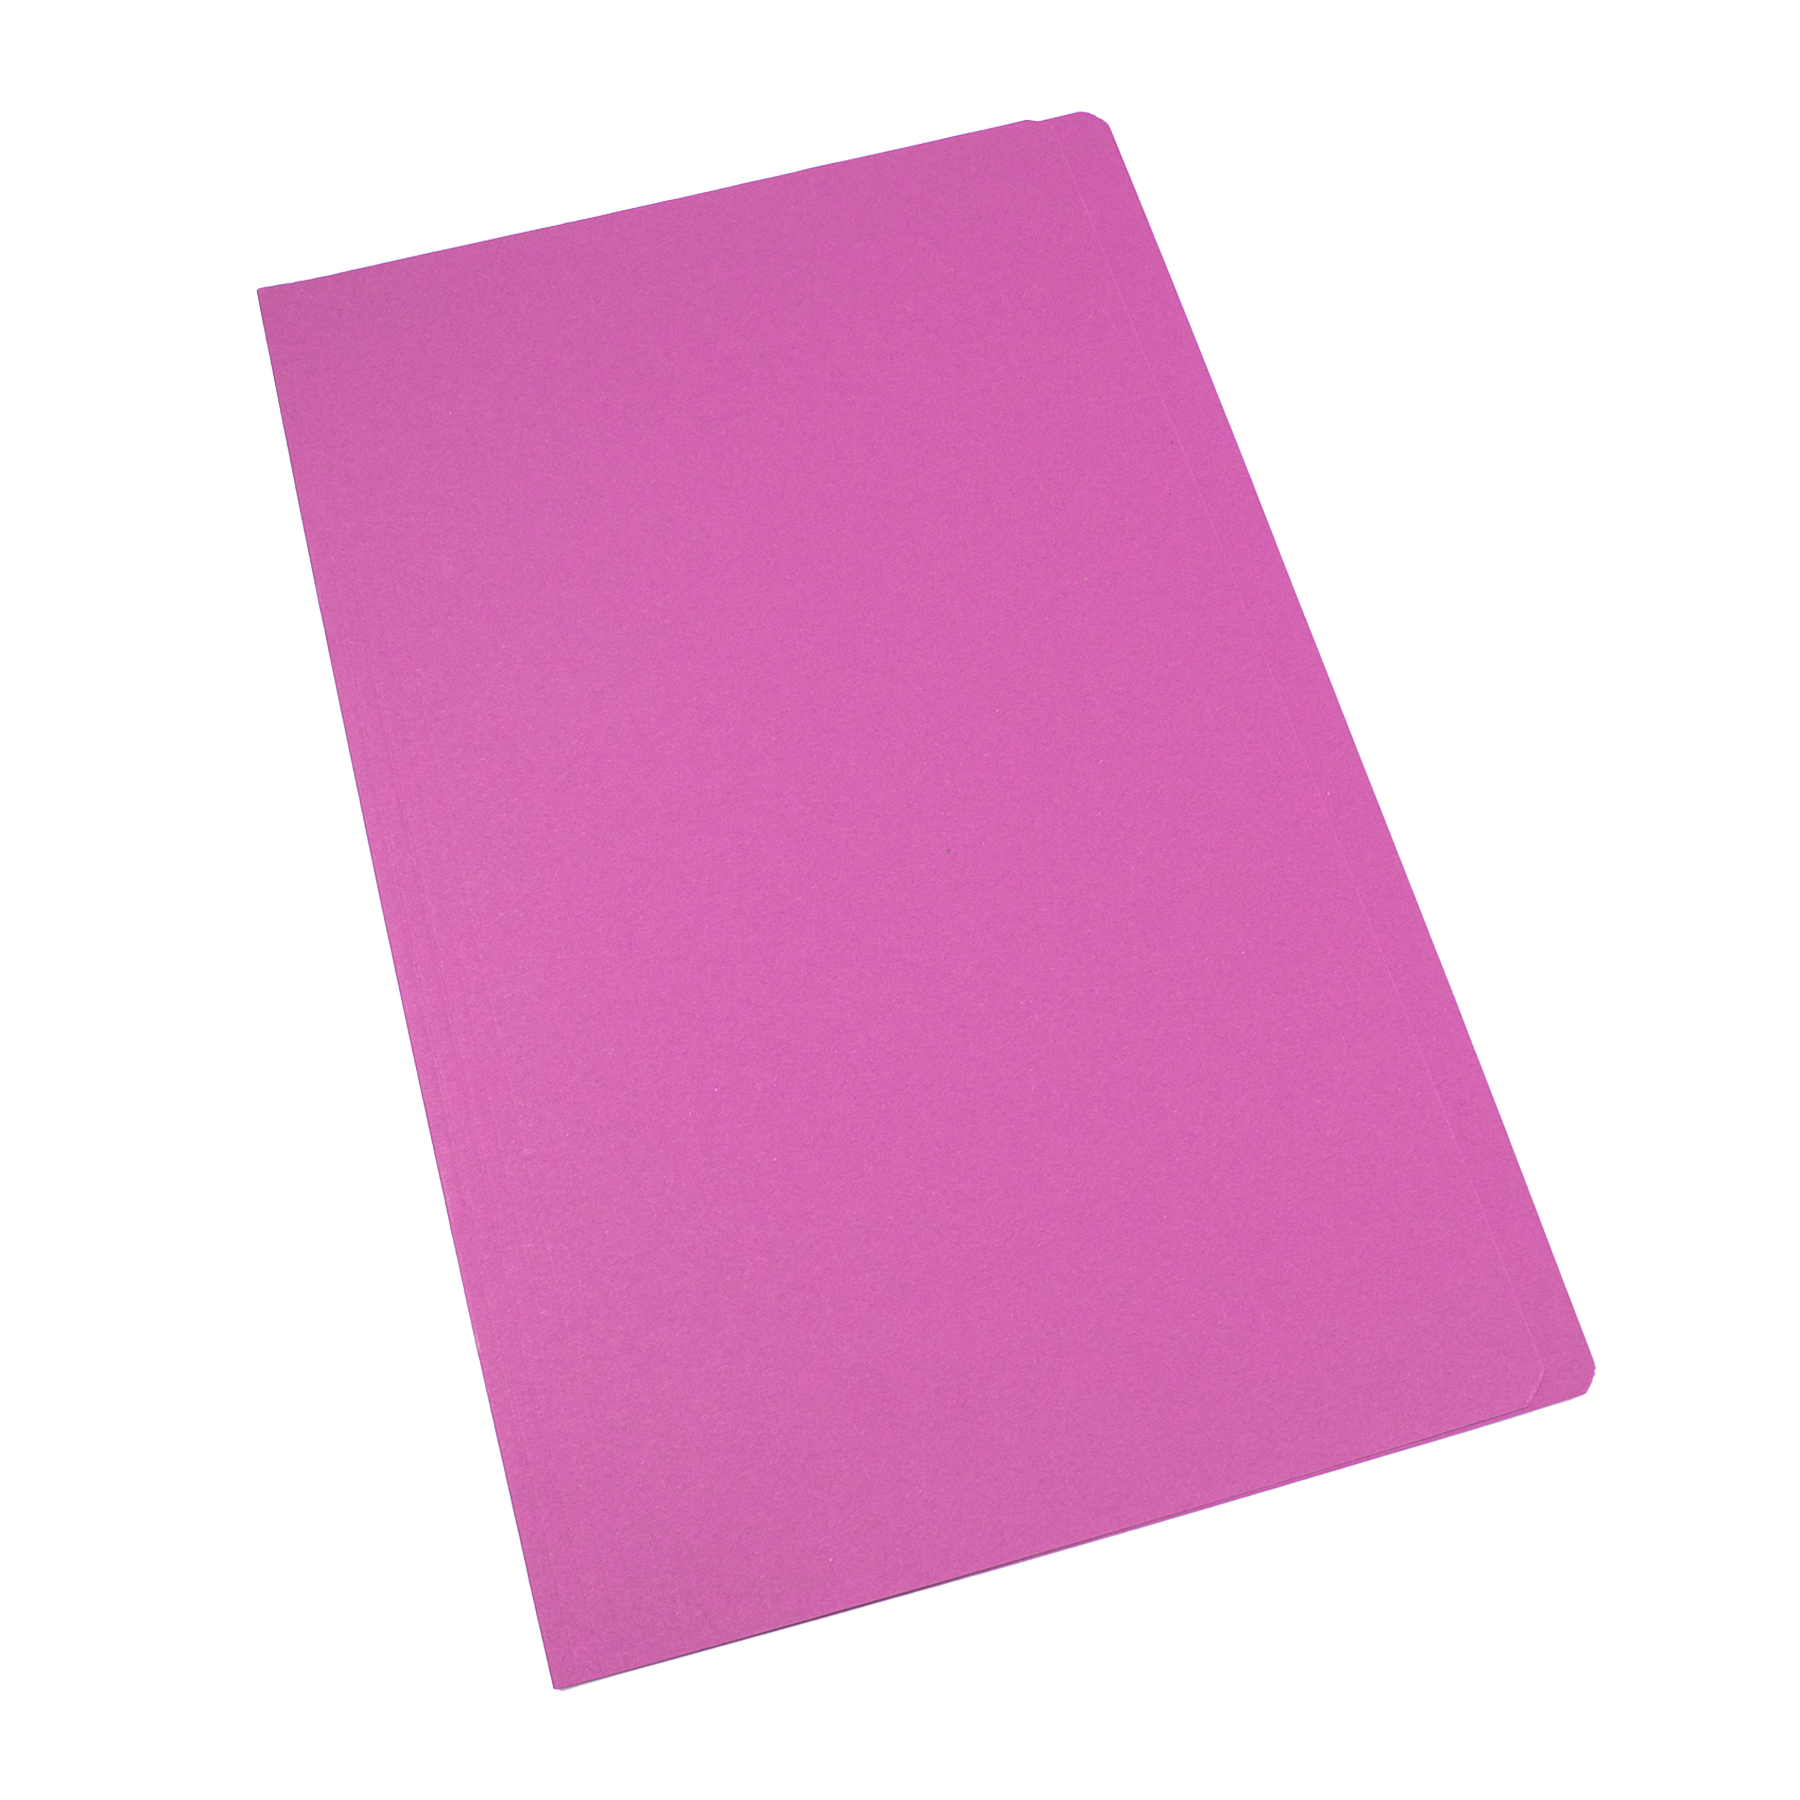 Folder Tamaño Oficio de Colores American Iris